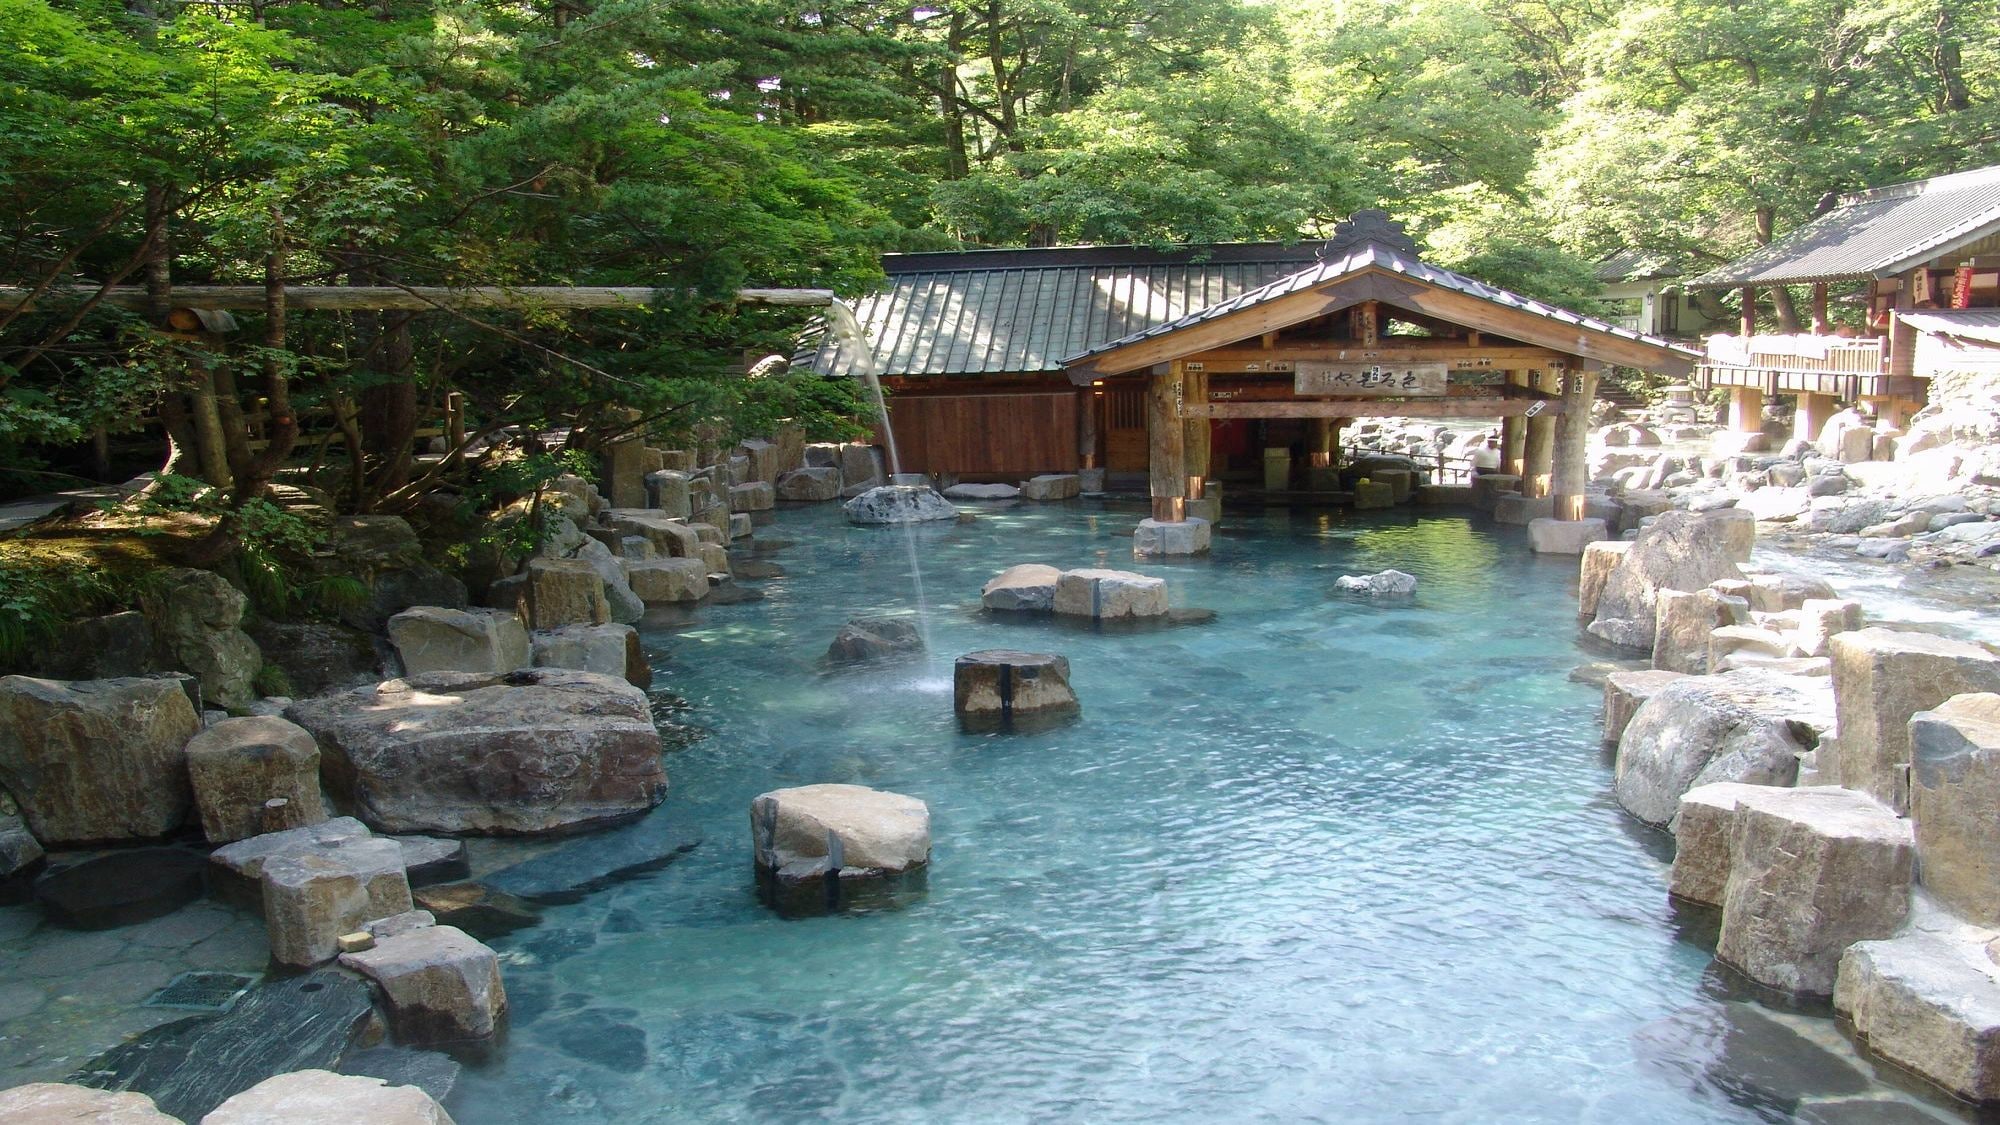 “Makanoyu”混浴，100張榻榻米/寶川溫泉是最著名的露天浴池。這是世界上非常受歡迎的露天浴池